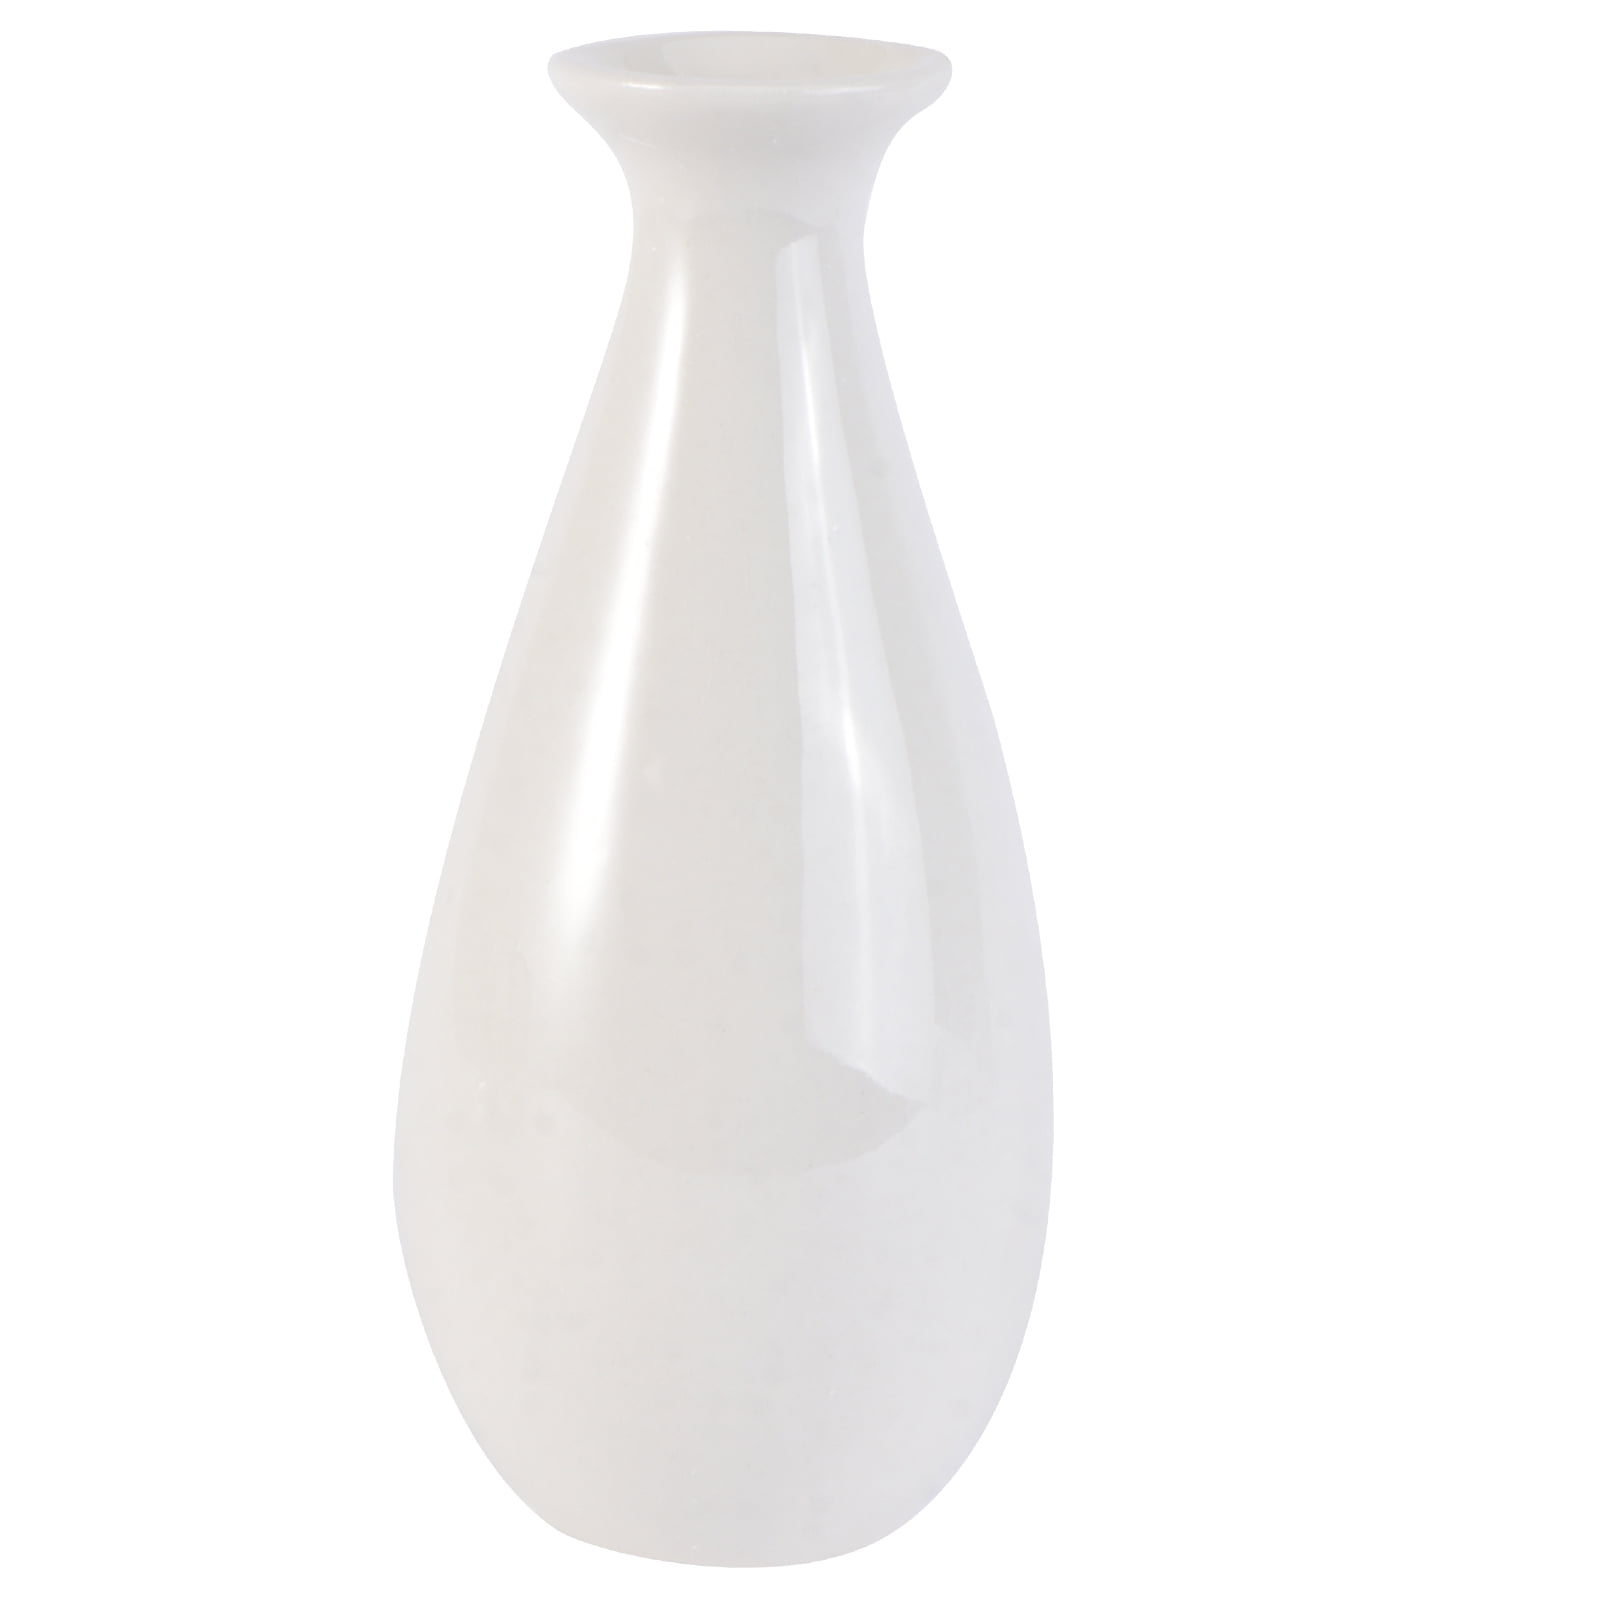 Creative Desktop Ceramic Flower Vase Simple Bullet Bottle Home Office Decor 